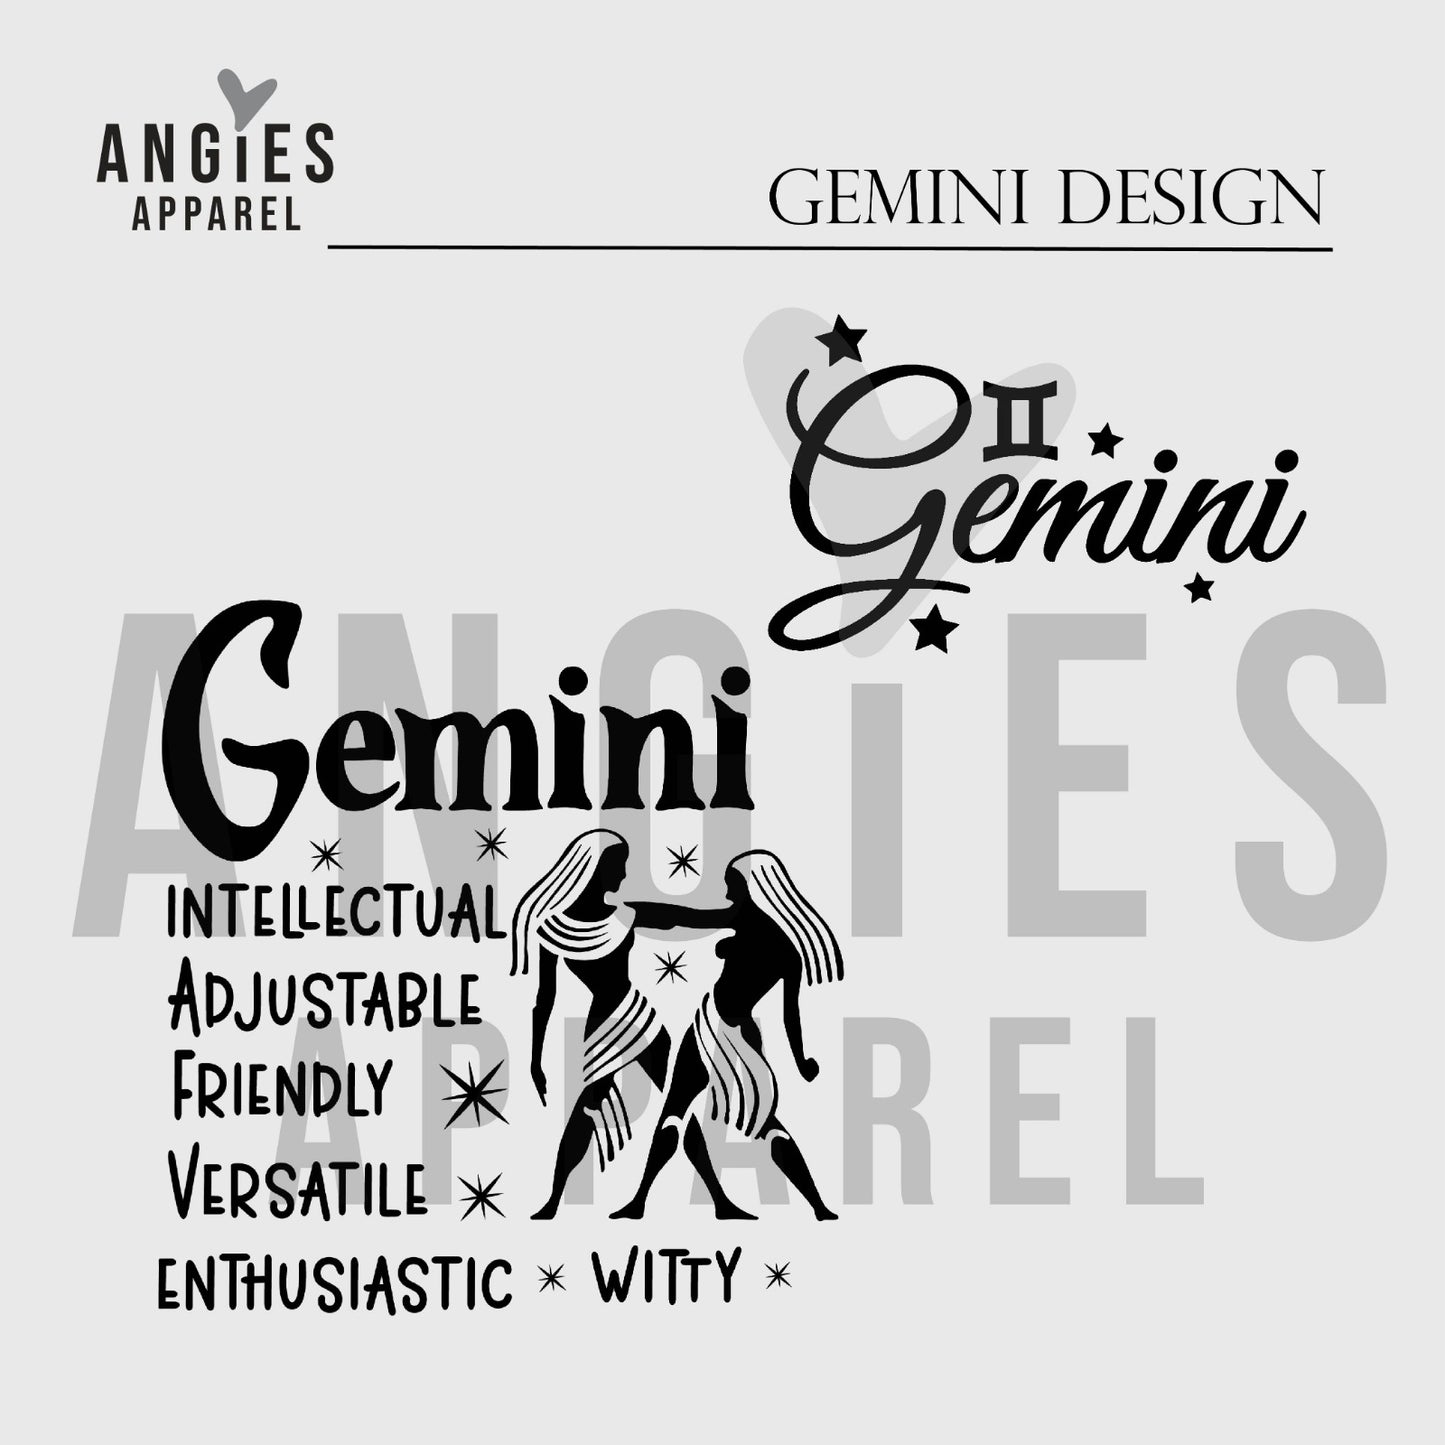 10. Gemini